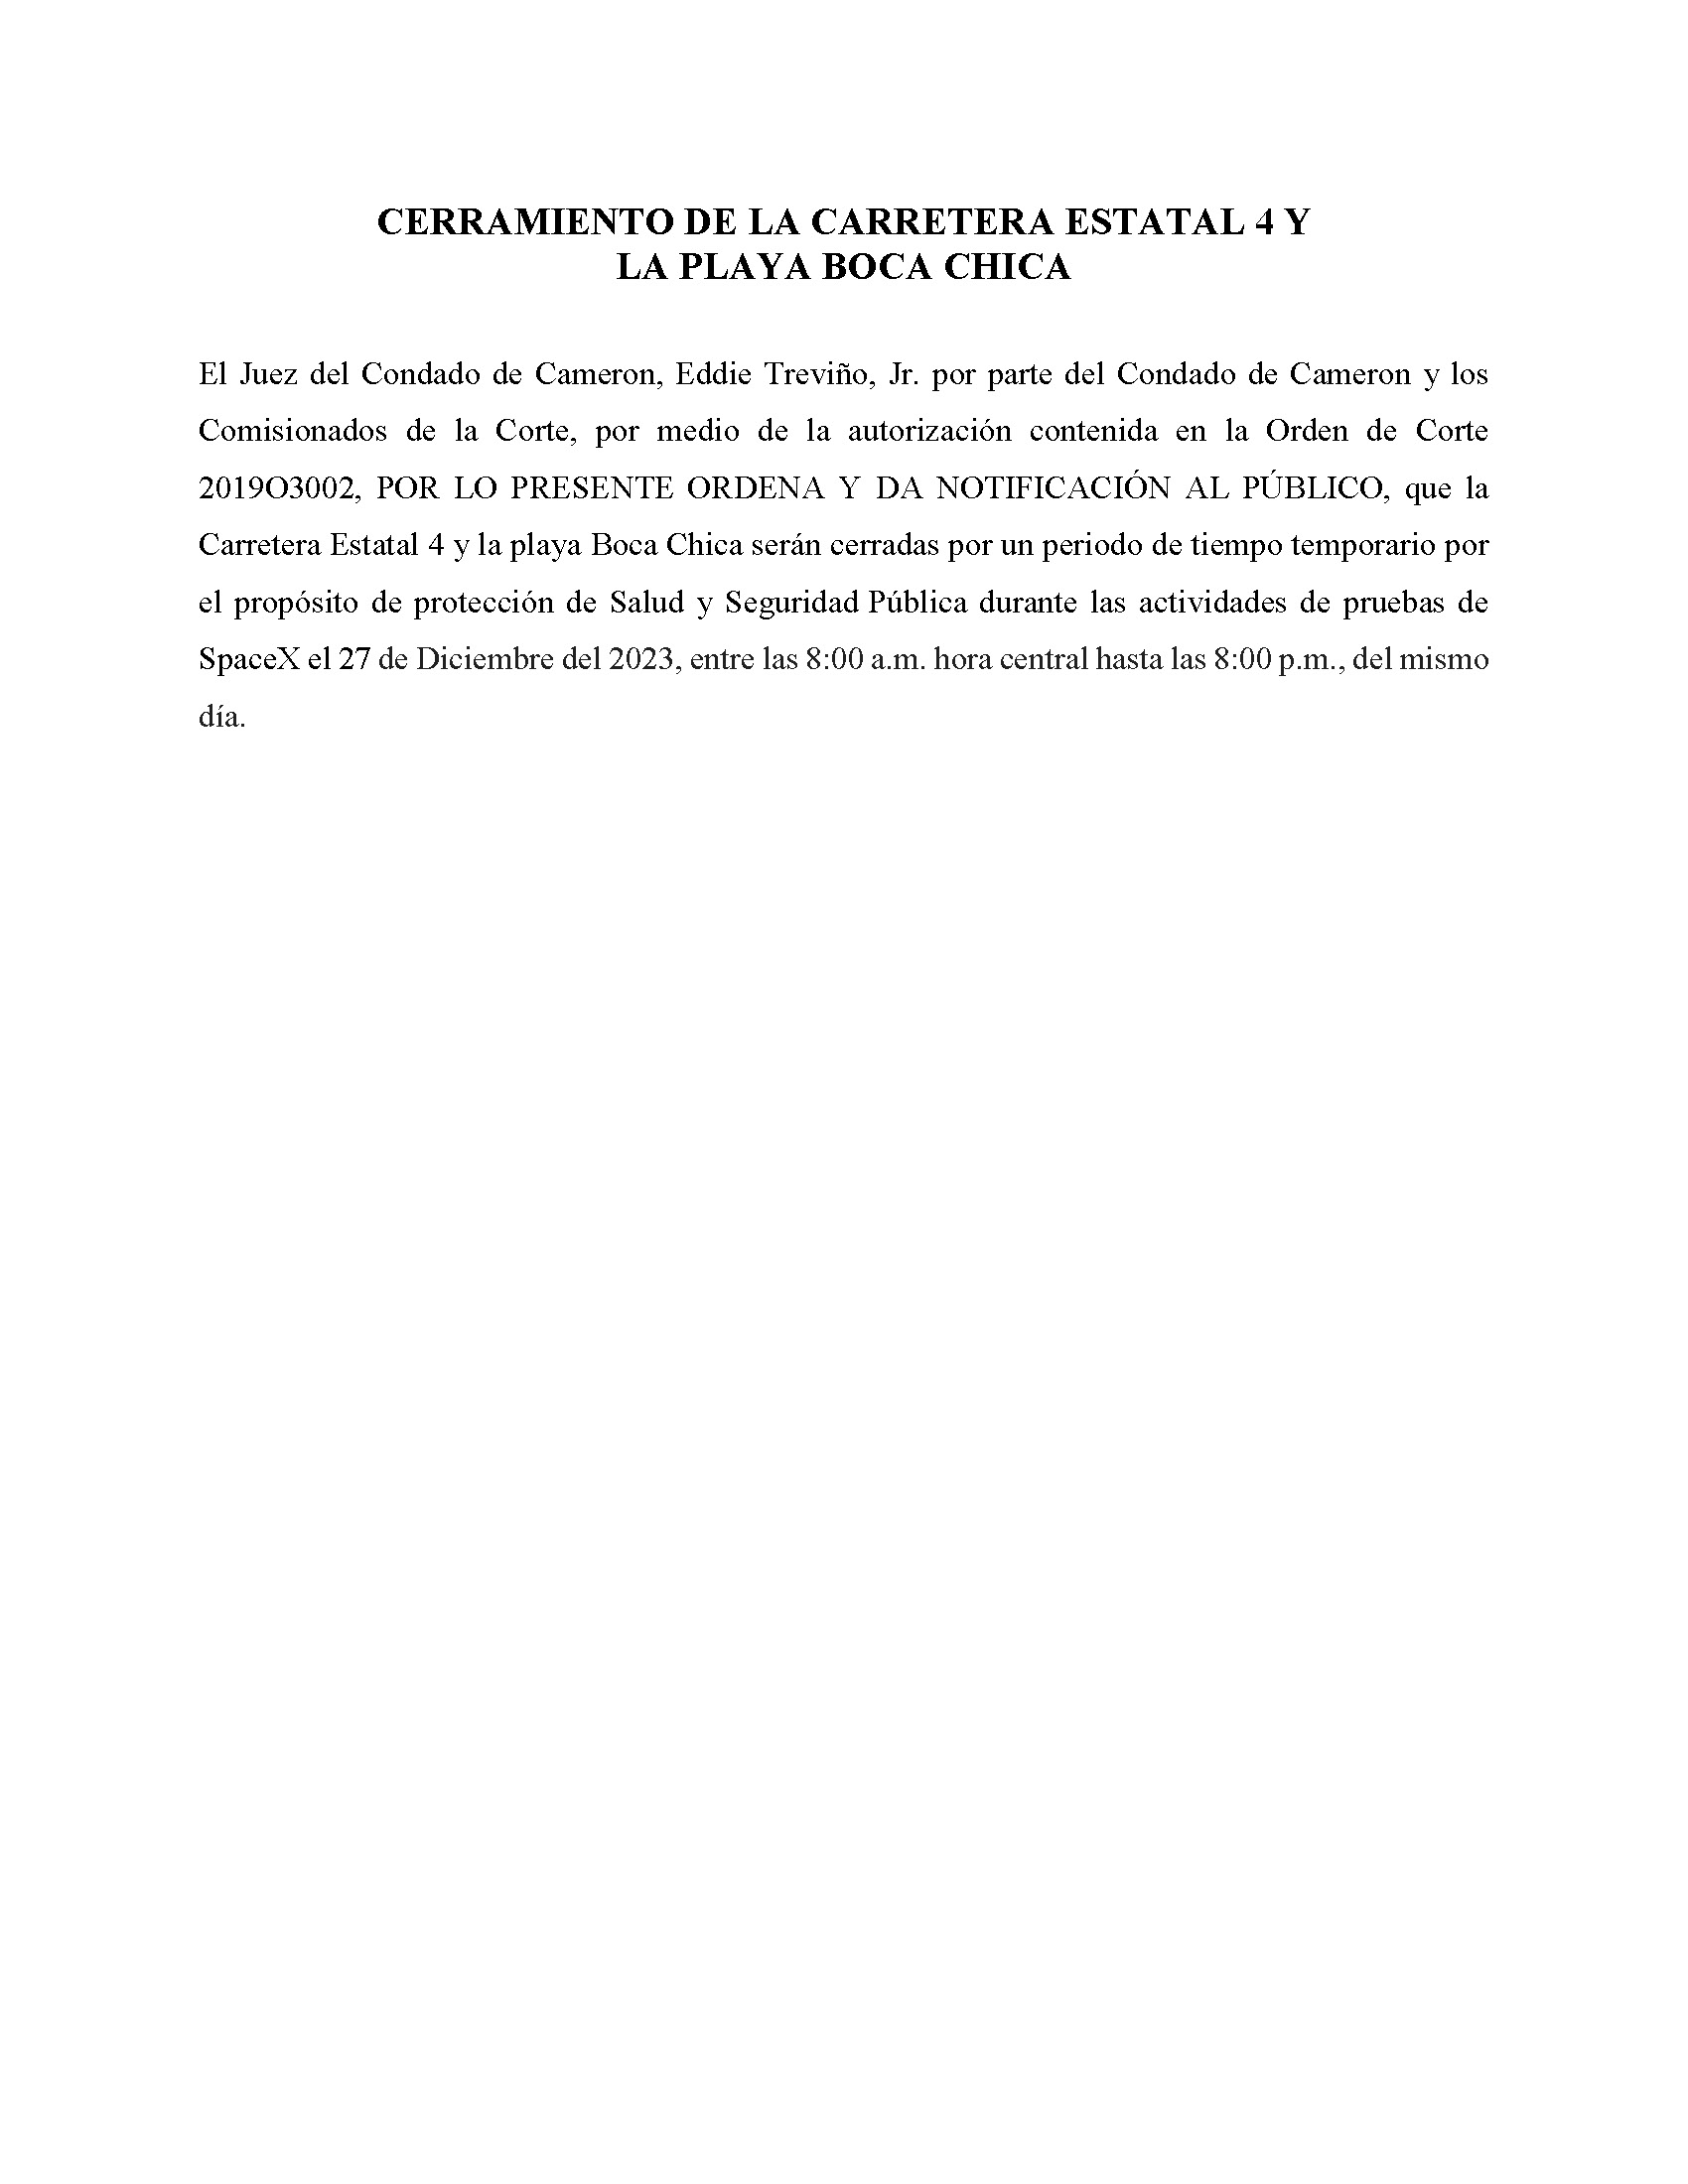 ORDER.CLOSURE OF HIGHWAY 4 Y LA PLAYA BOCA CHICA.SPANISH.12.27.23